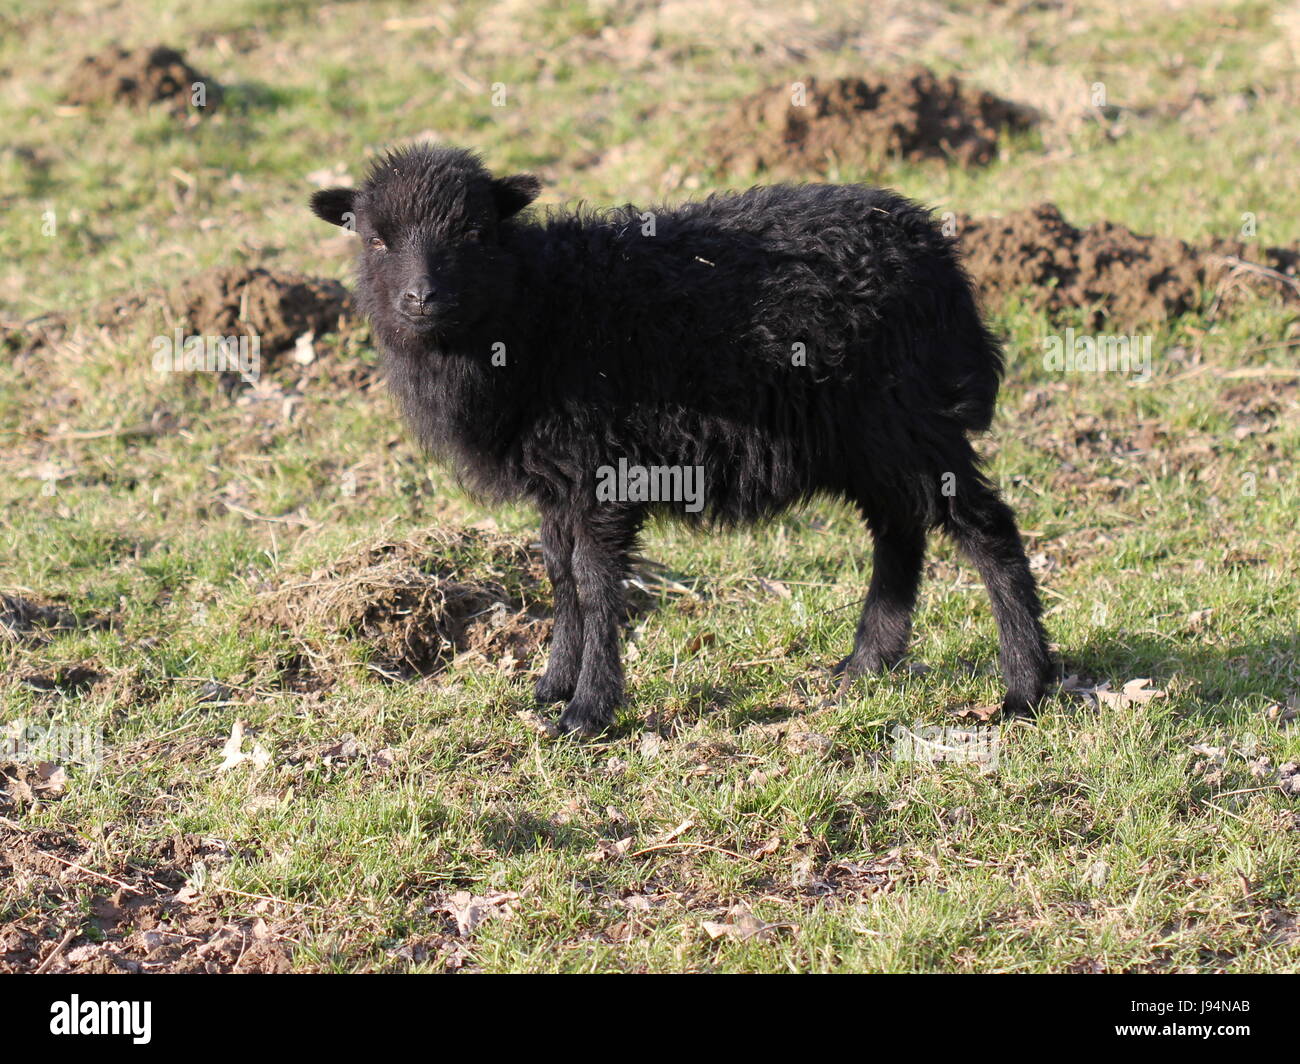 black, swarthy, jetblack, deep black, zoo, sheep, wool, small, tiny, little, Stock Photo